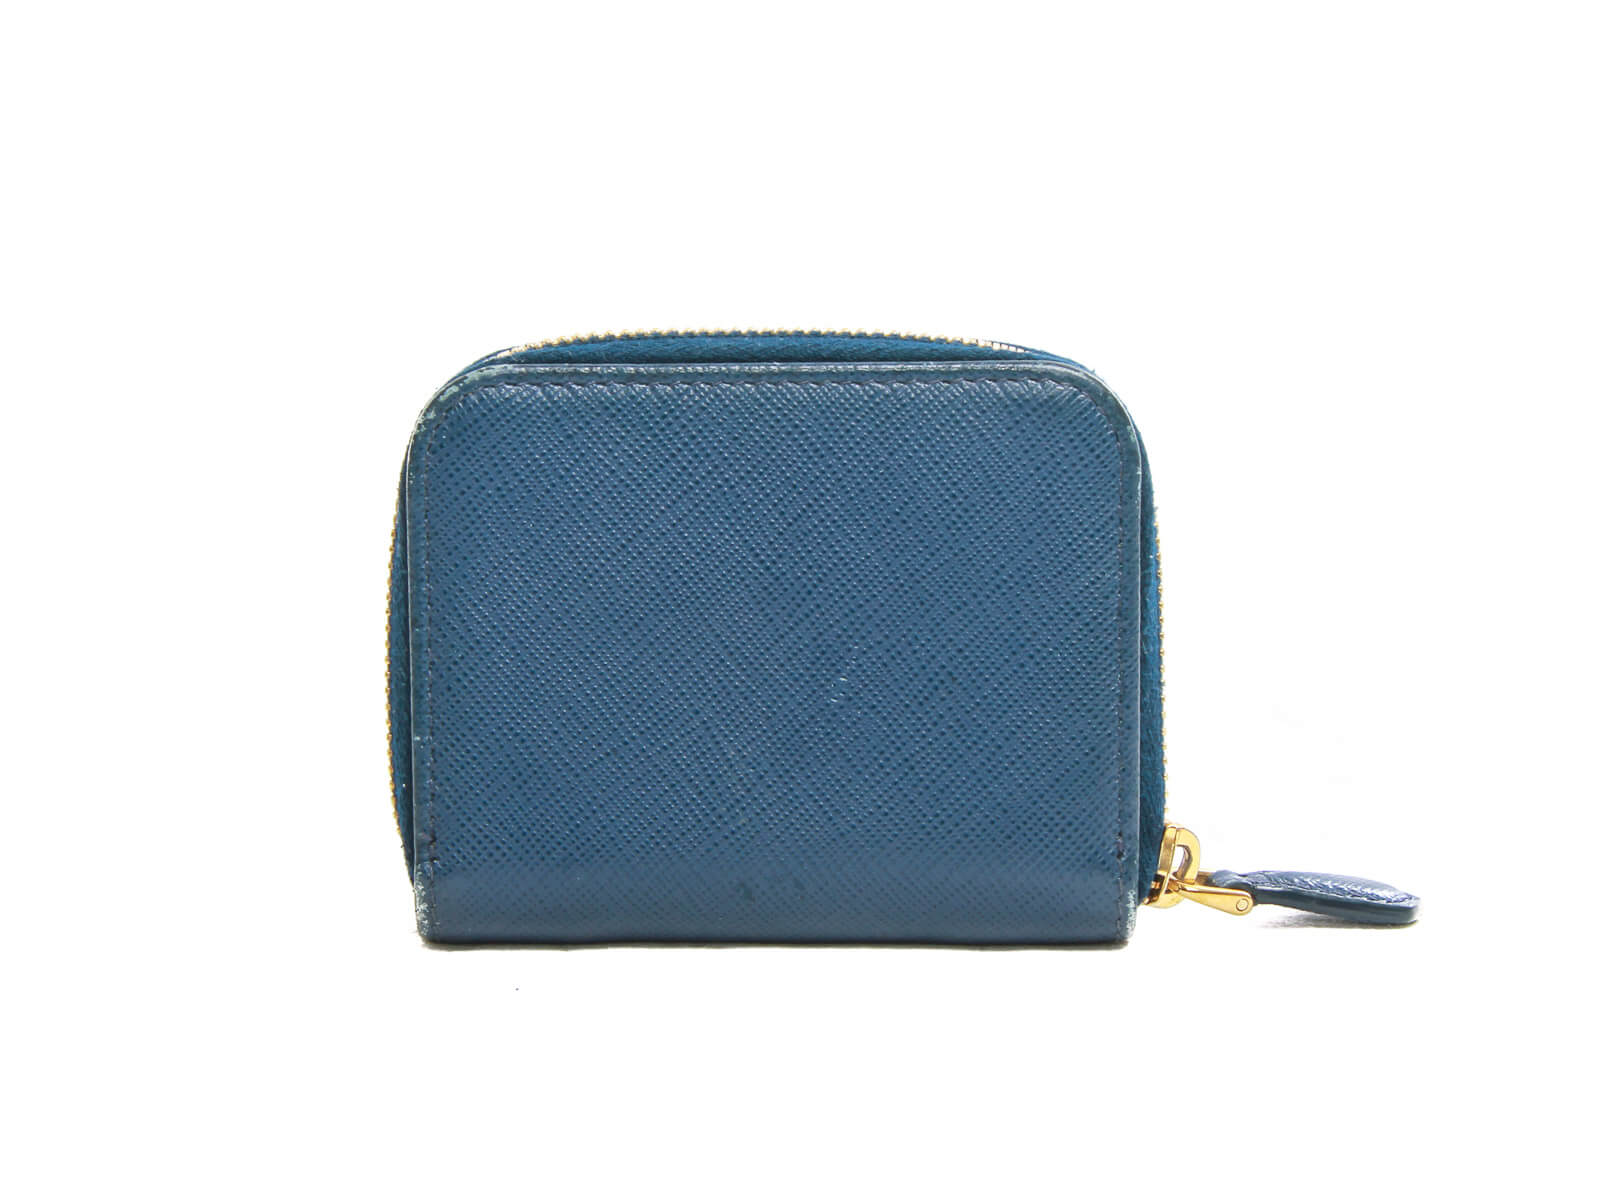 Prada Saffiano Leather Wallet - PRADA - Cumini